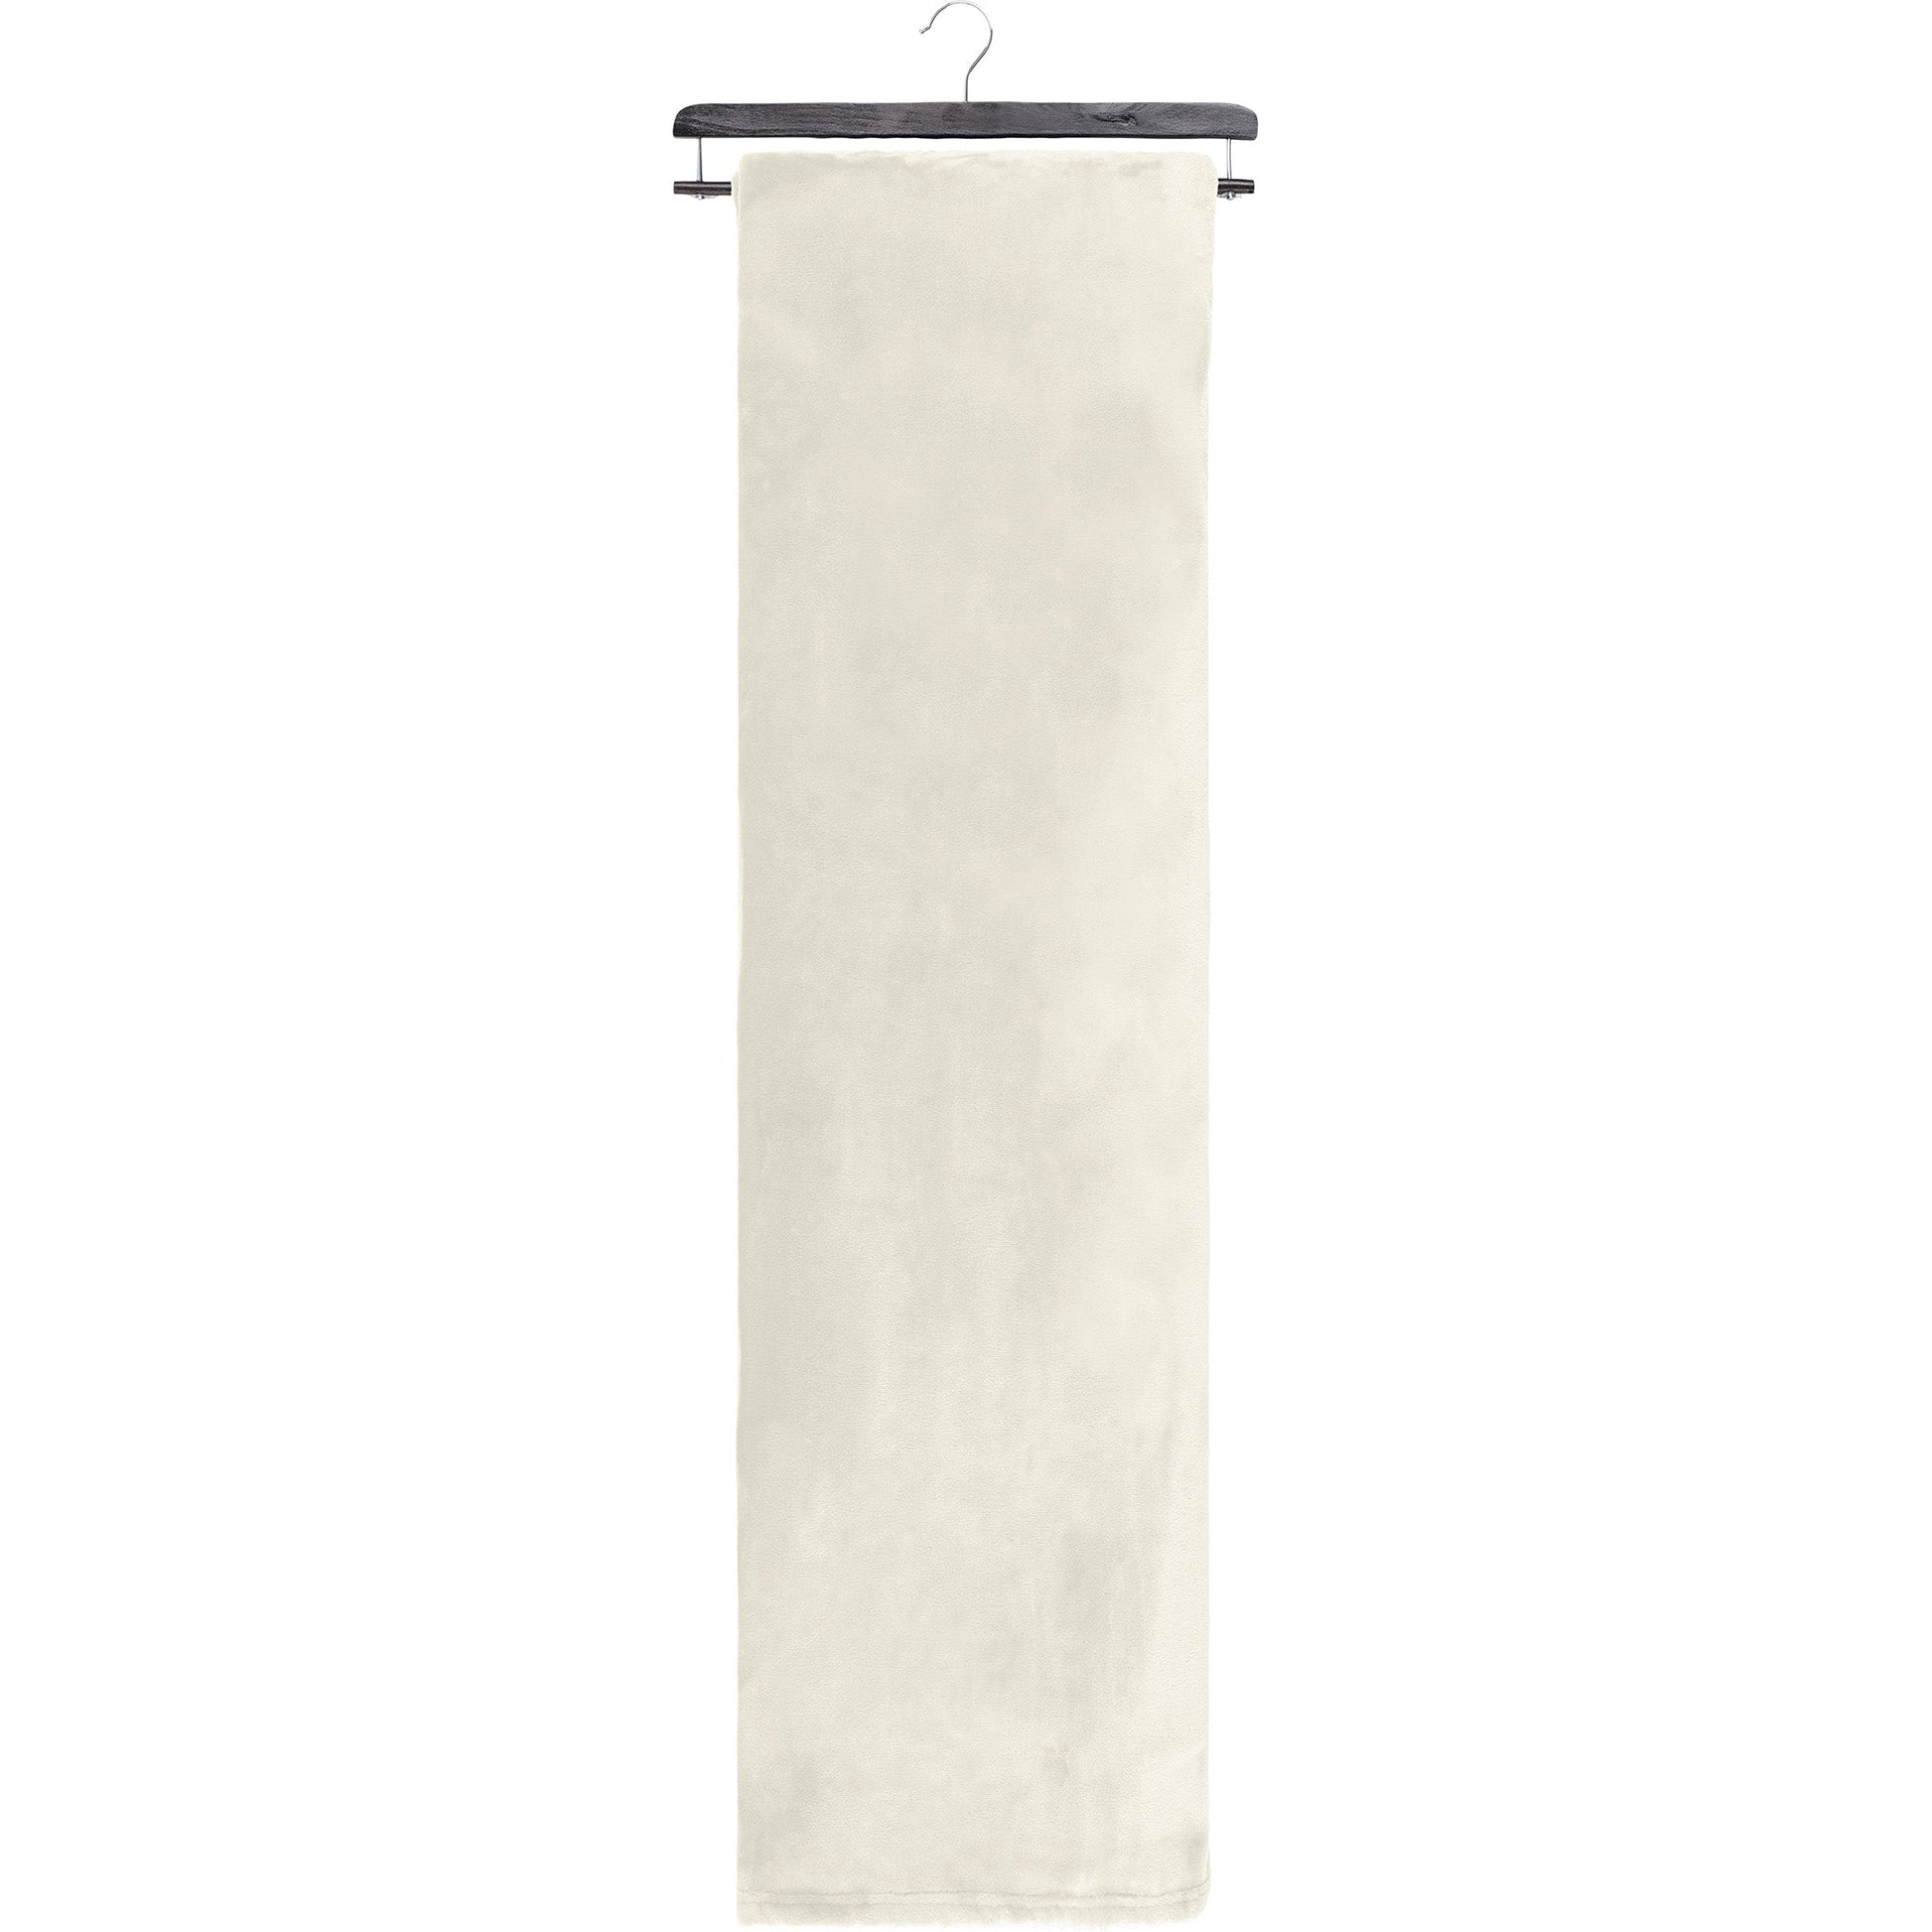 Super Soft Flannel Blanket Throw Home Decor Bedding 60X80 Cream - DecoElegance - Blanket Throw Home Bedding